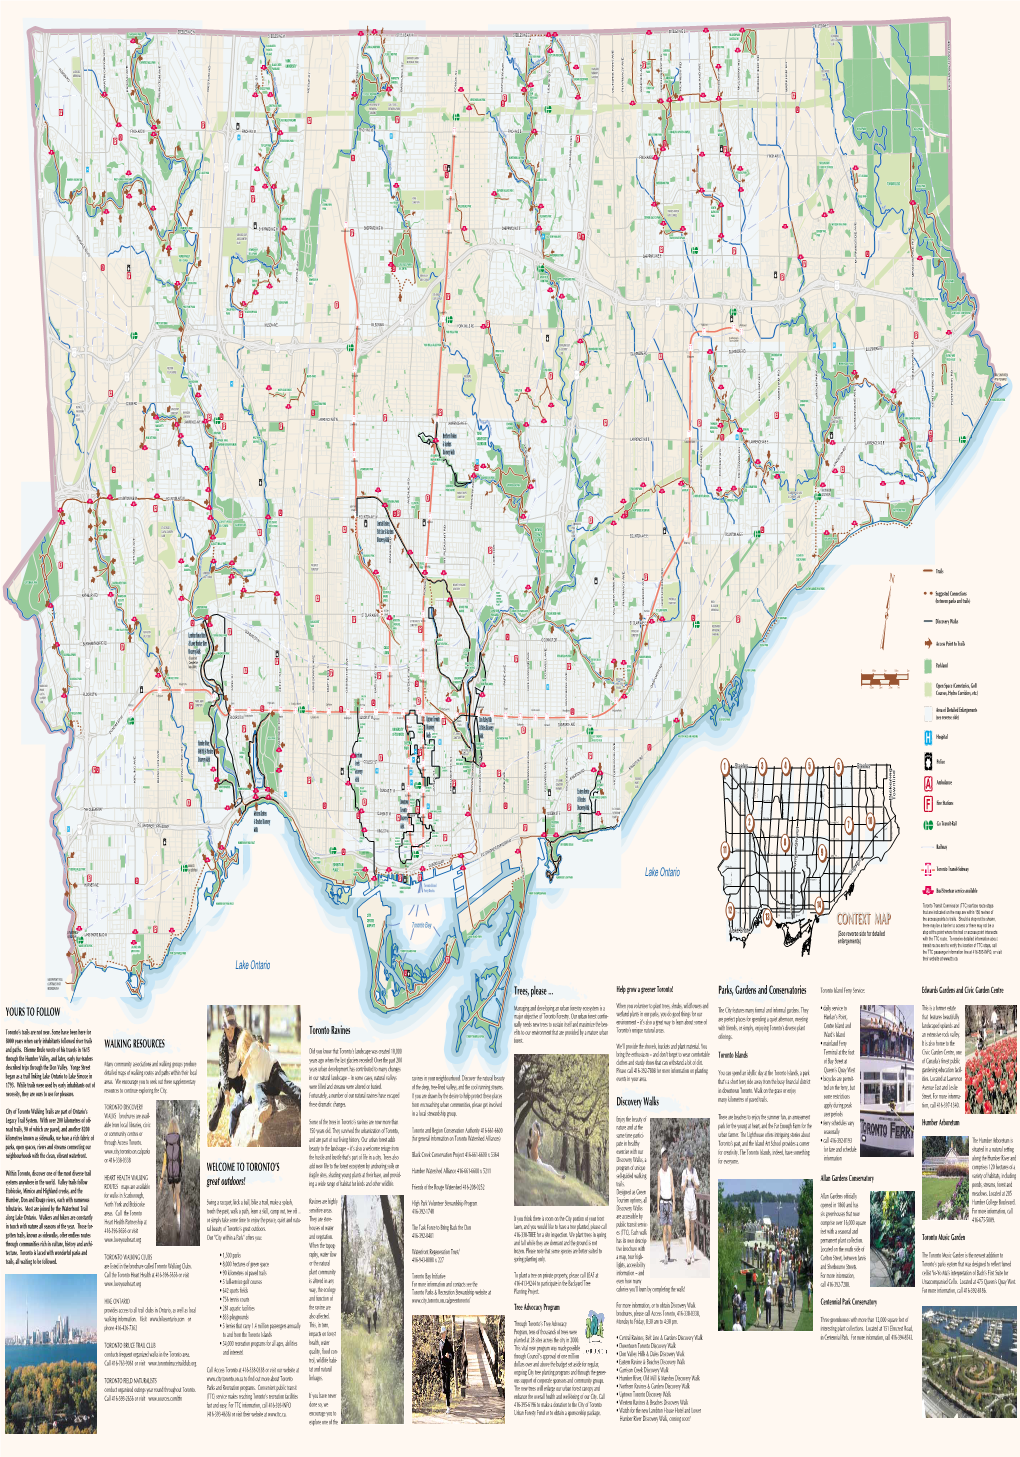 Toronto Parks & Trails Map 2001